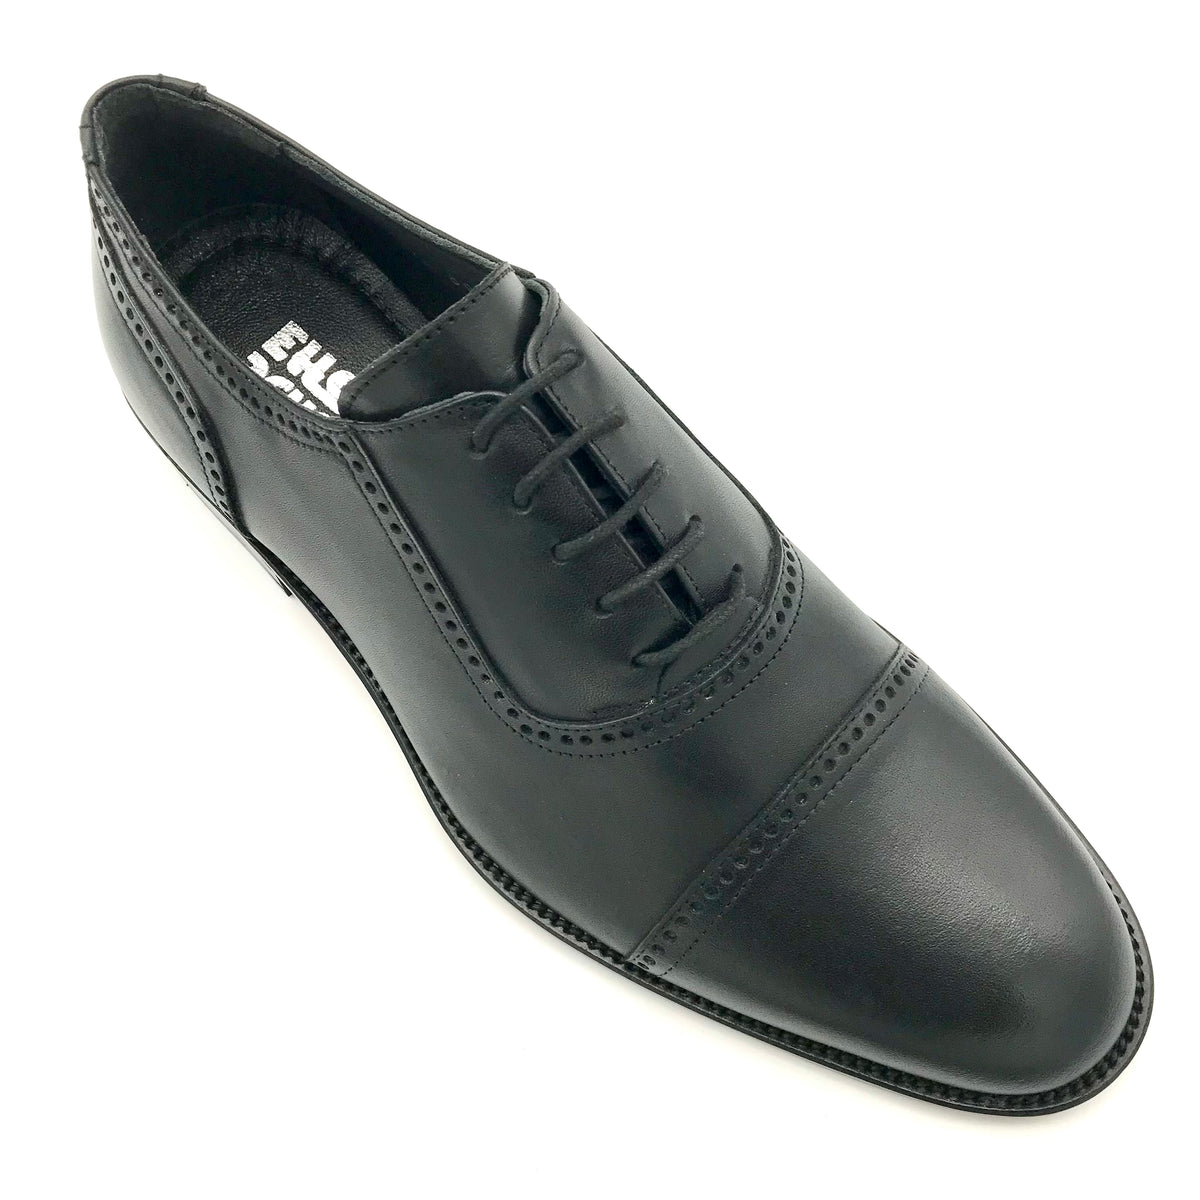 Herren Business Schuhe Elegant Leder - Schwarz